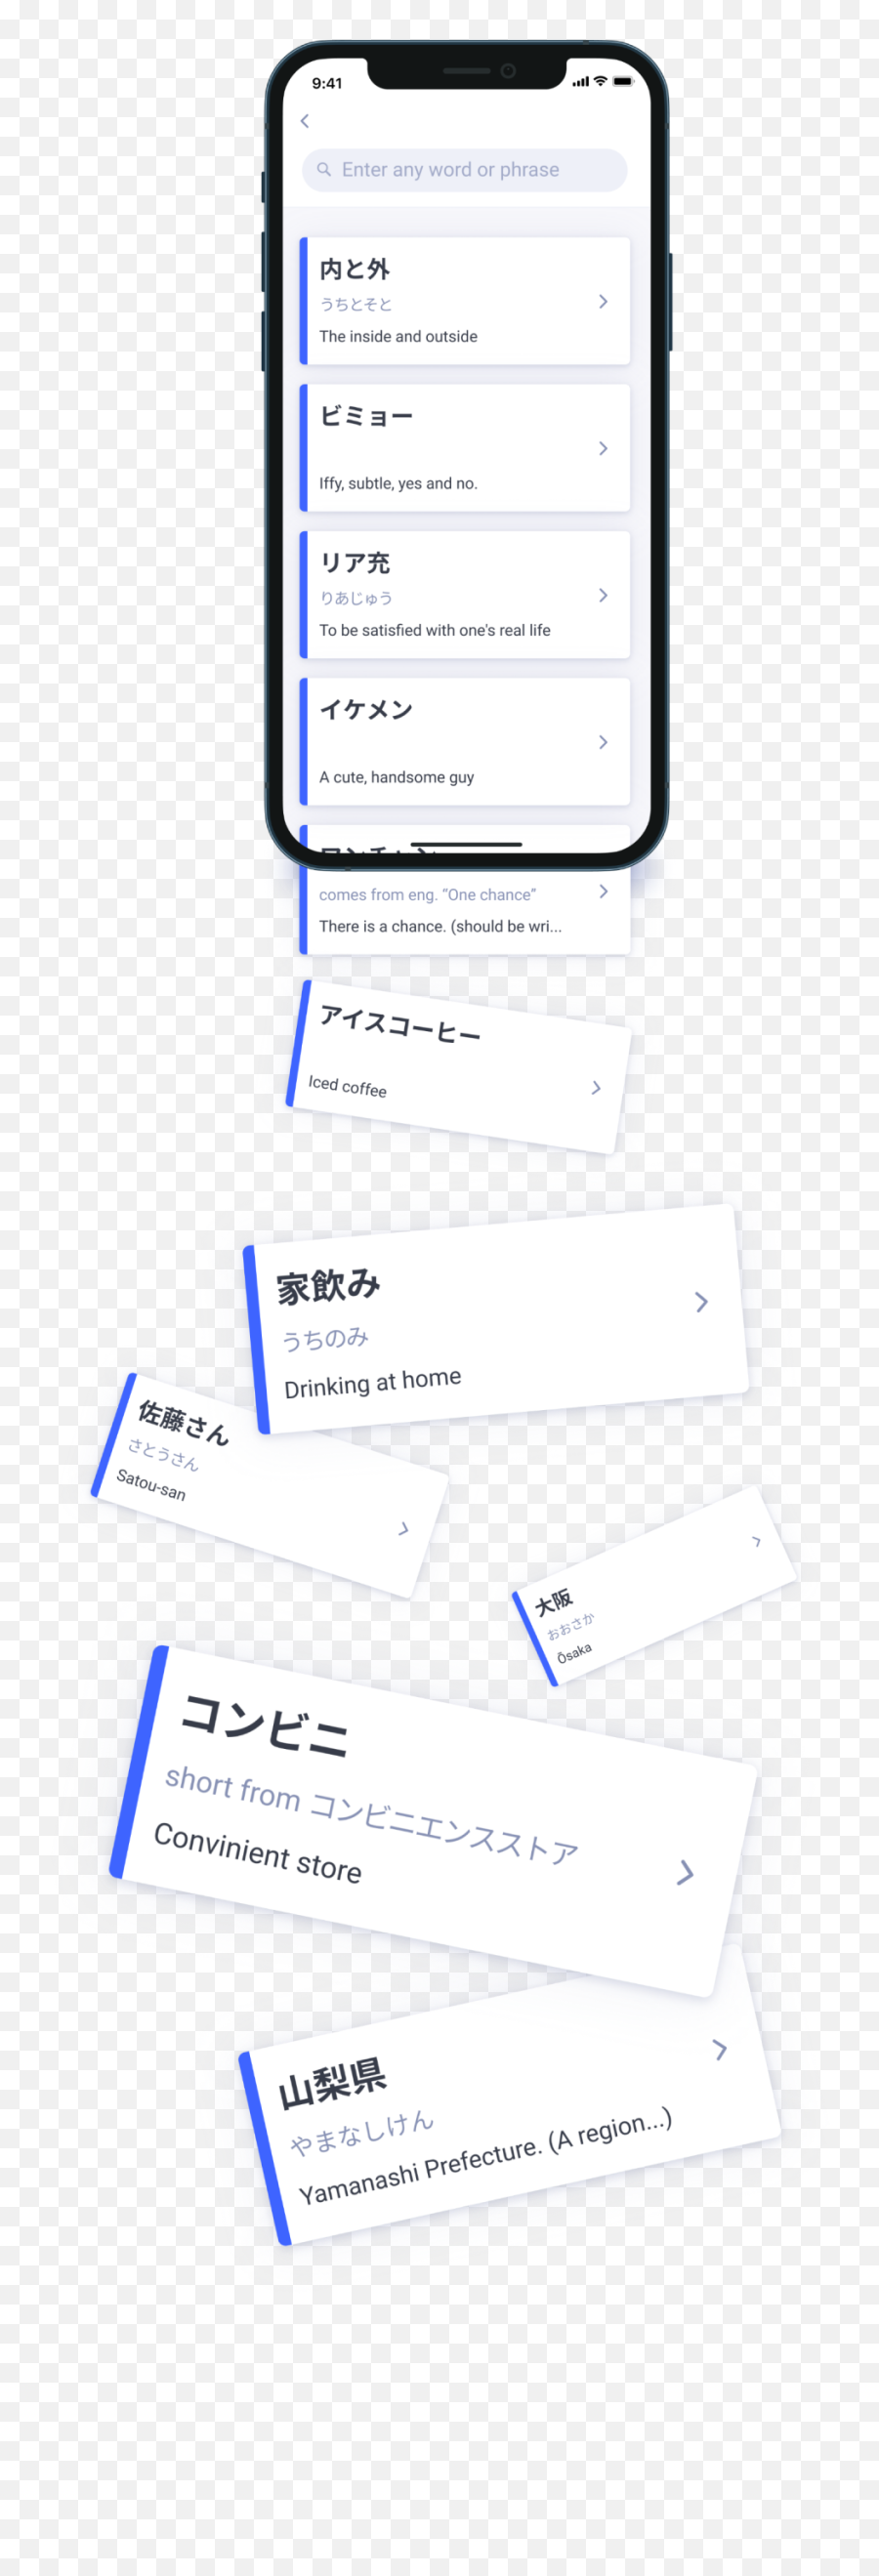 Aomi Japanese - Horizontal Emoji,Japanese Phrases For Emotions